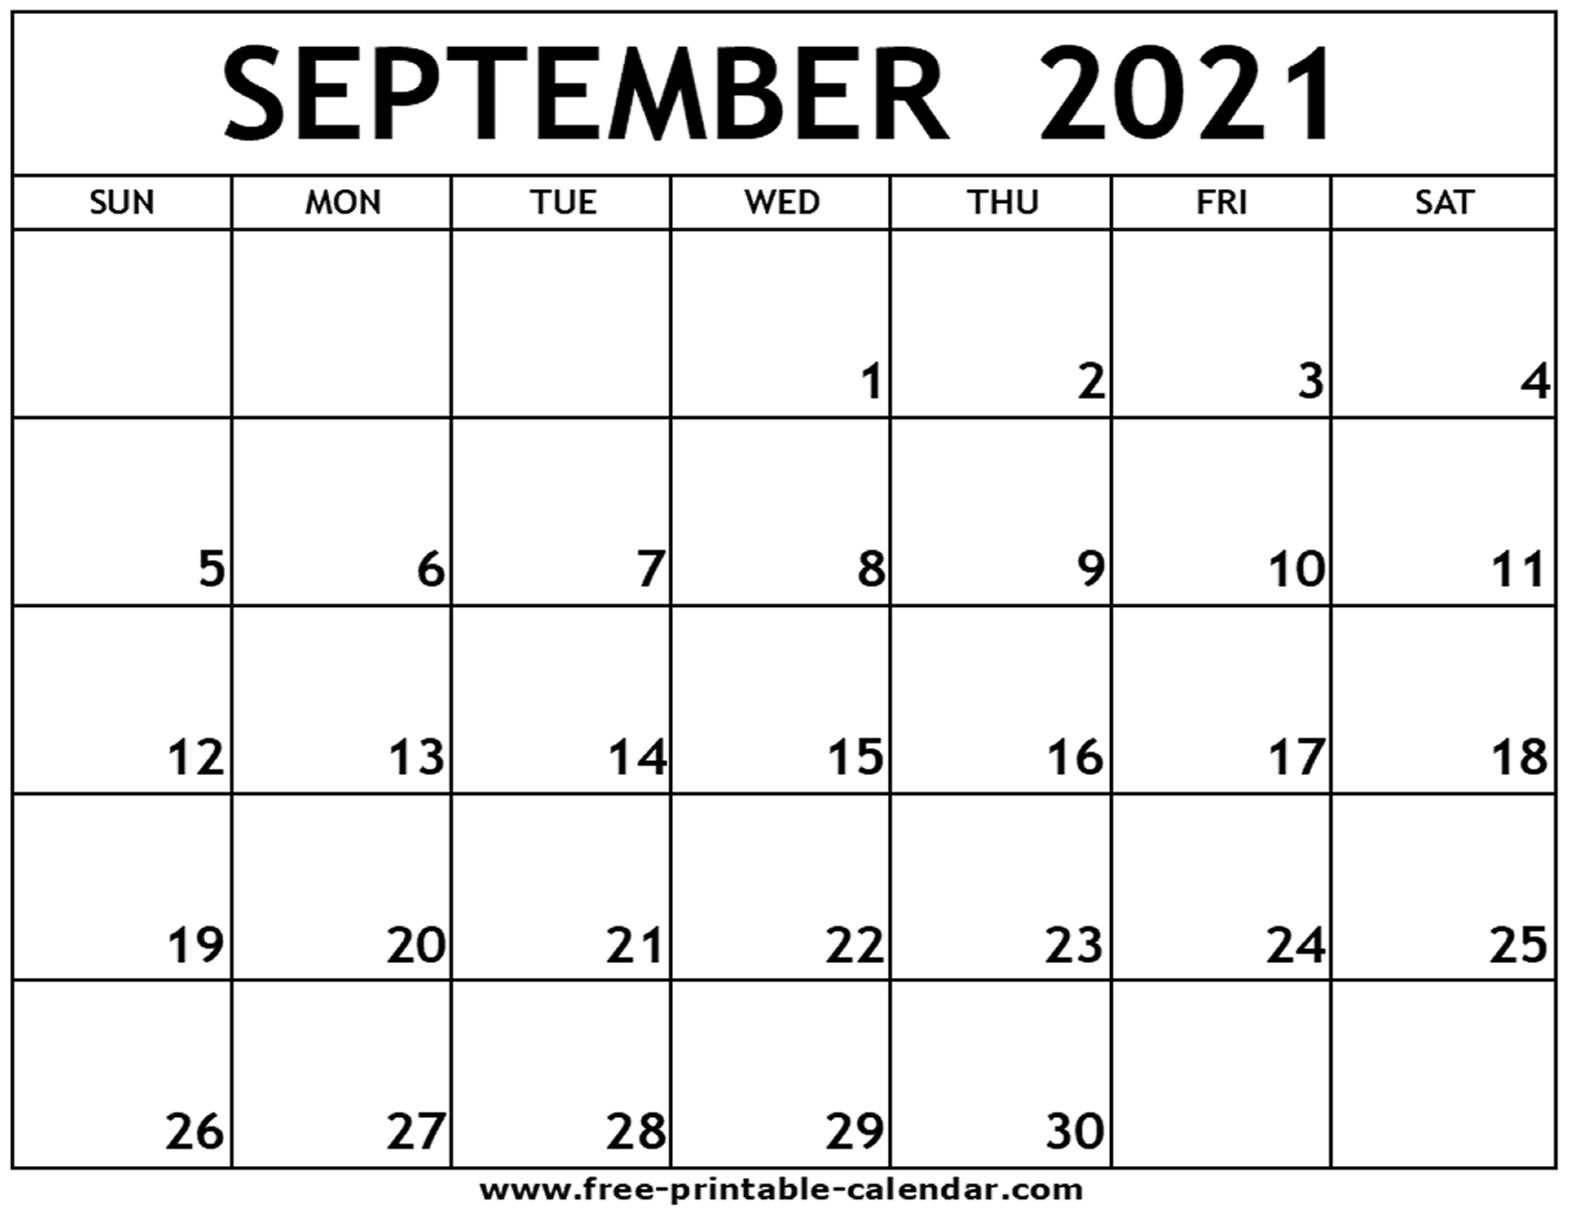 September 2021 Calendar | Free 2021 Printable Calendars September 2021 Calendar Free